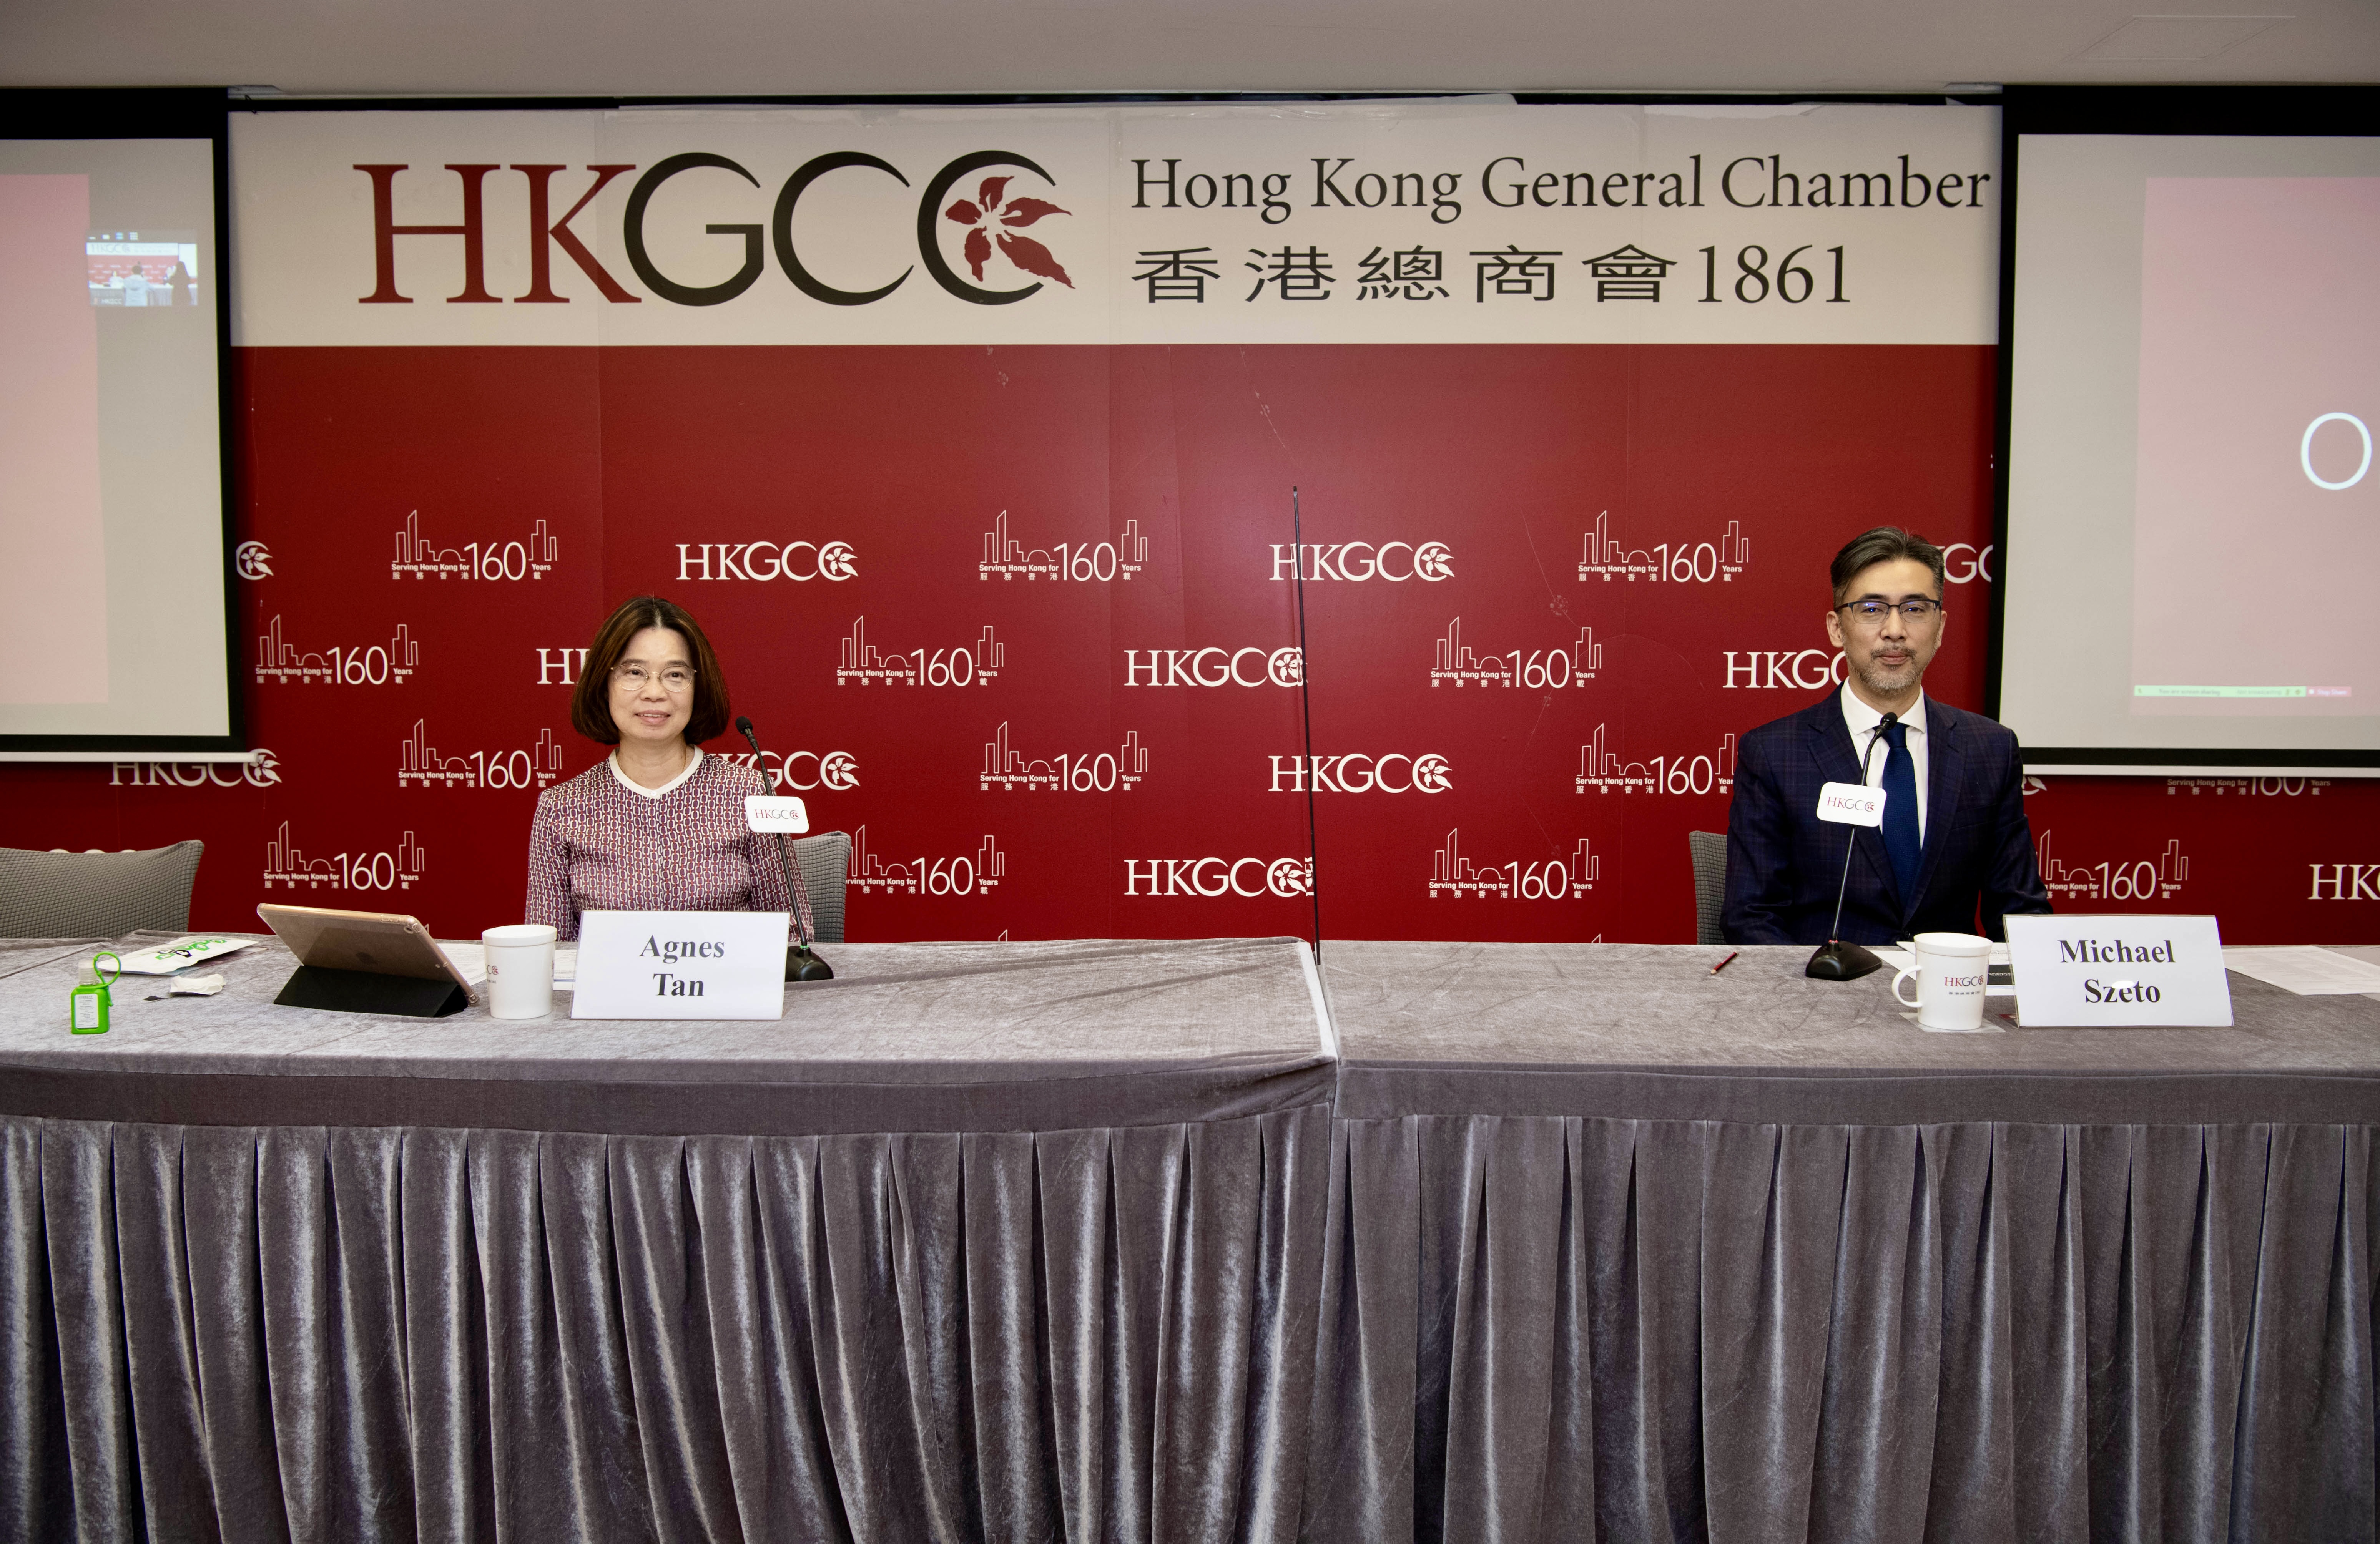 ONC柯伍陳律師事務所司徒肇基律師為香港總商會的網上講座講解經濟衰退下的僱傭法律問題